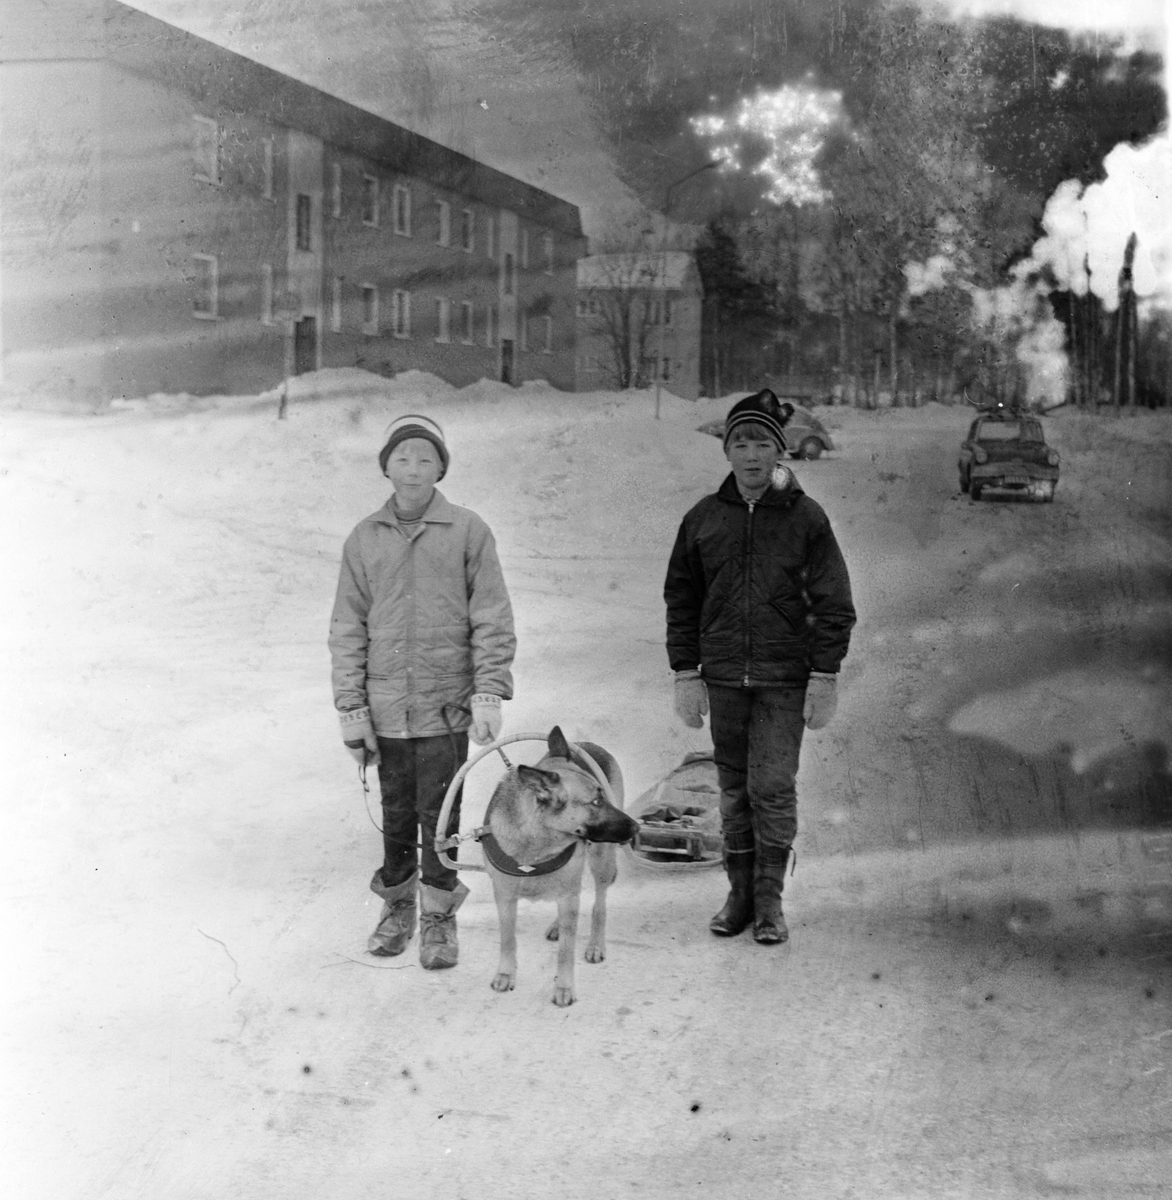 Arbrå,
Pojke med hund o pulka,
Februari 1968